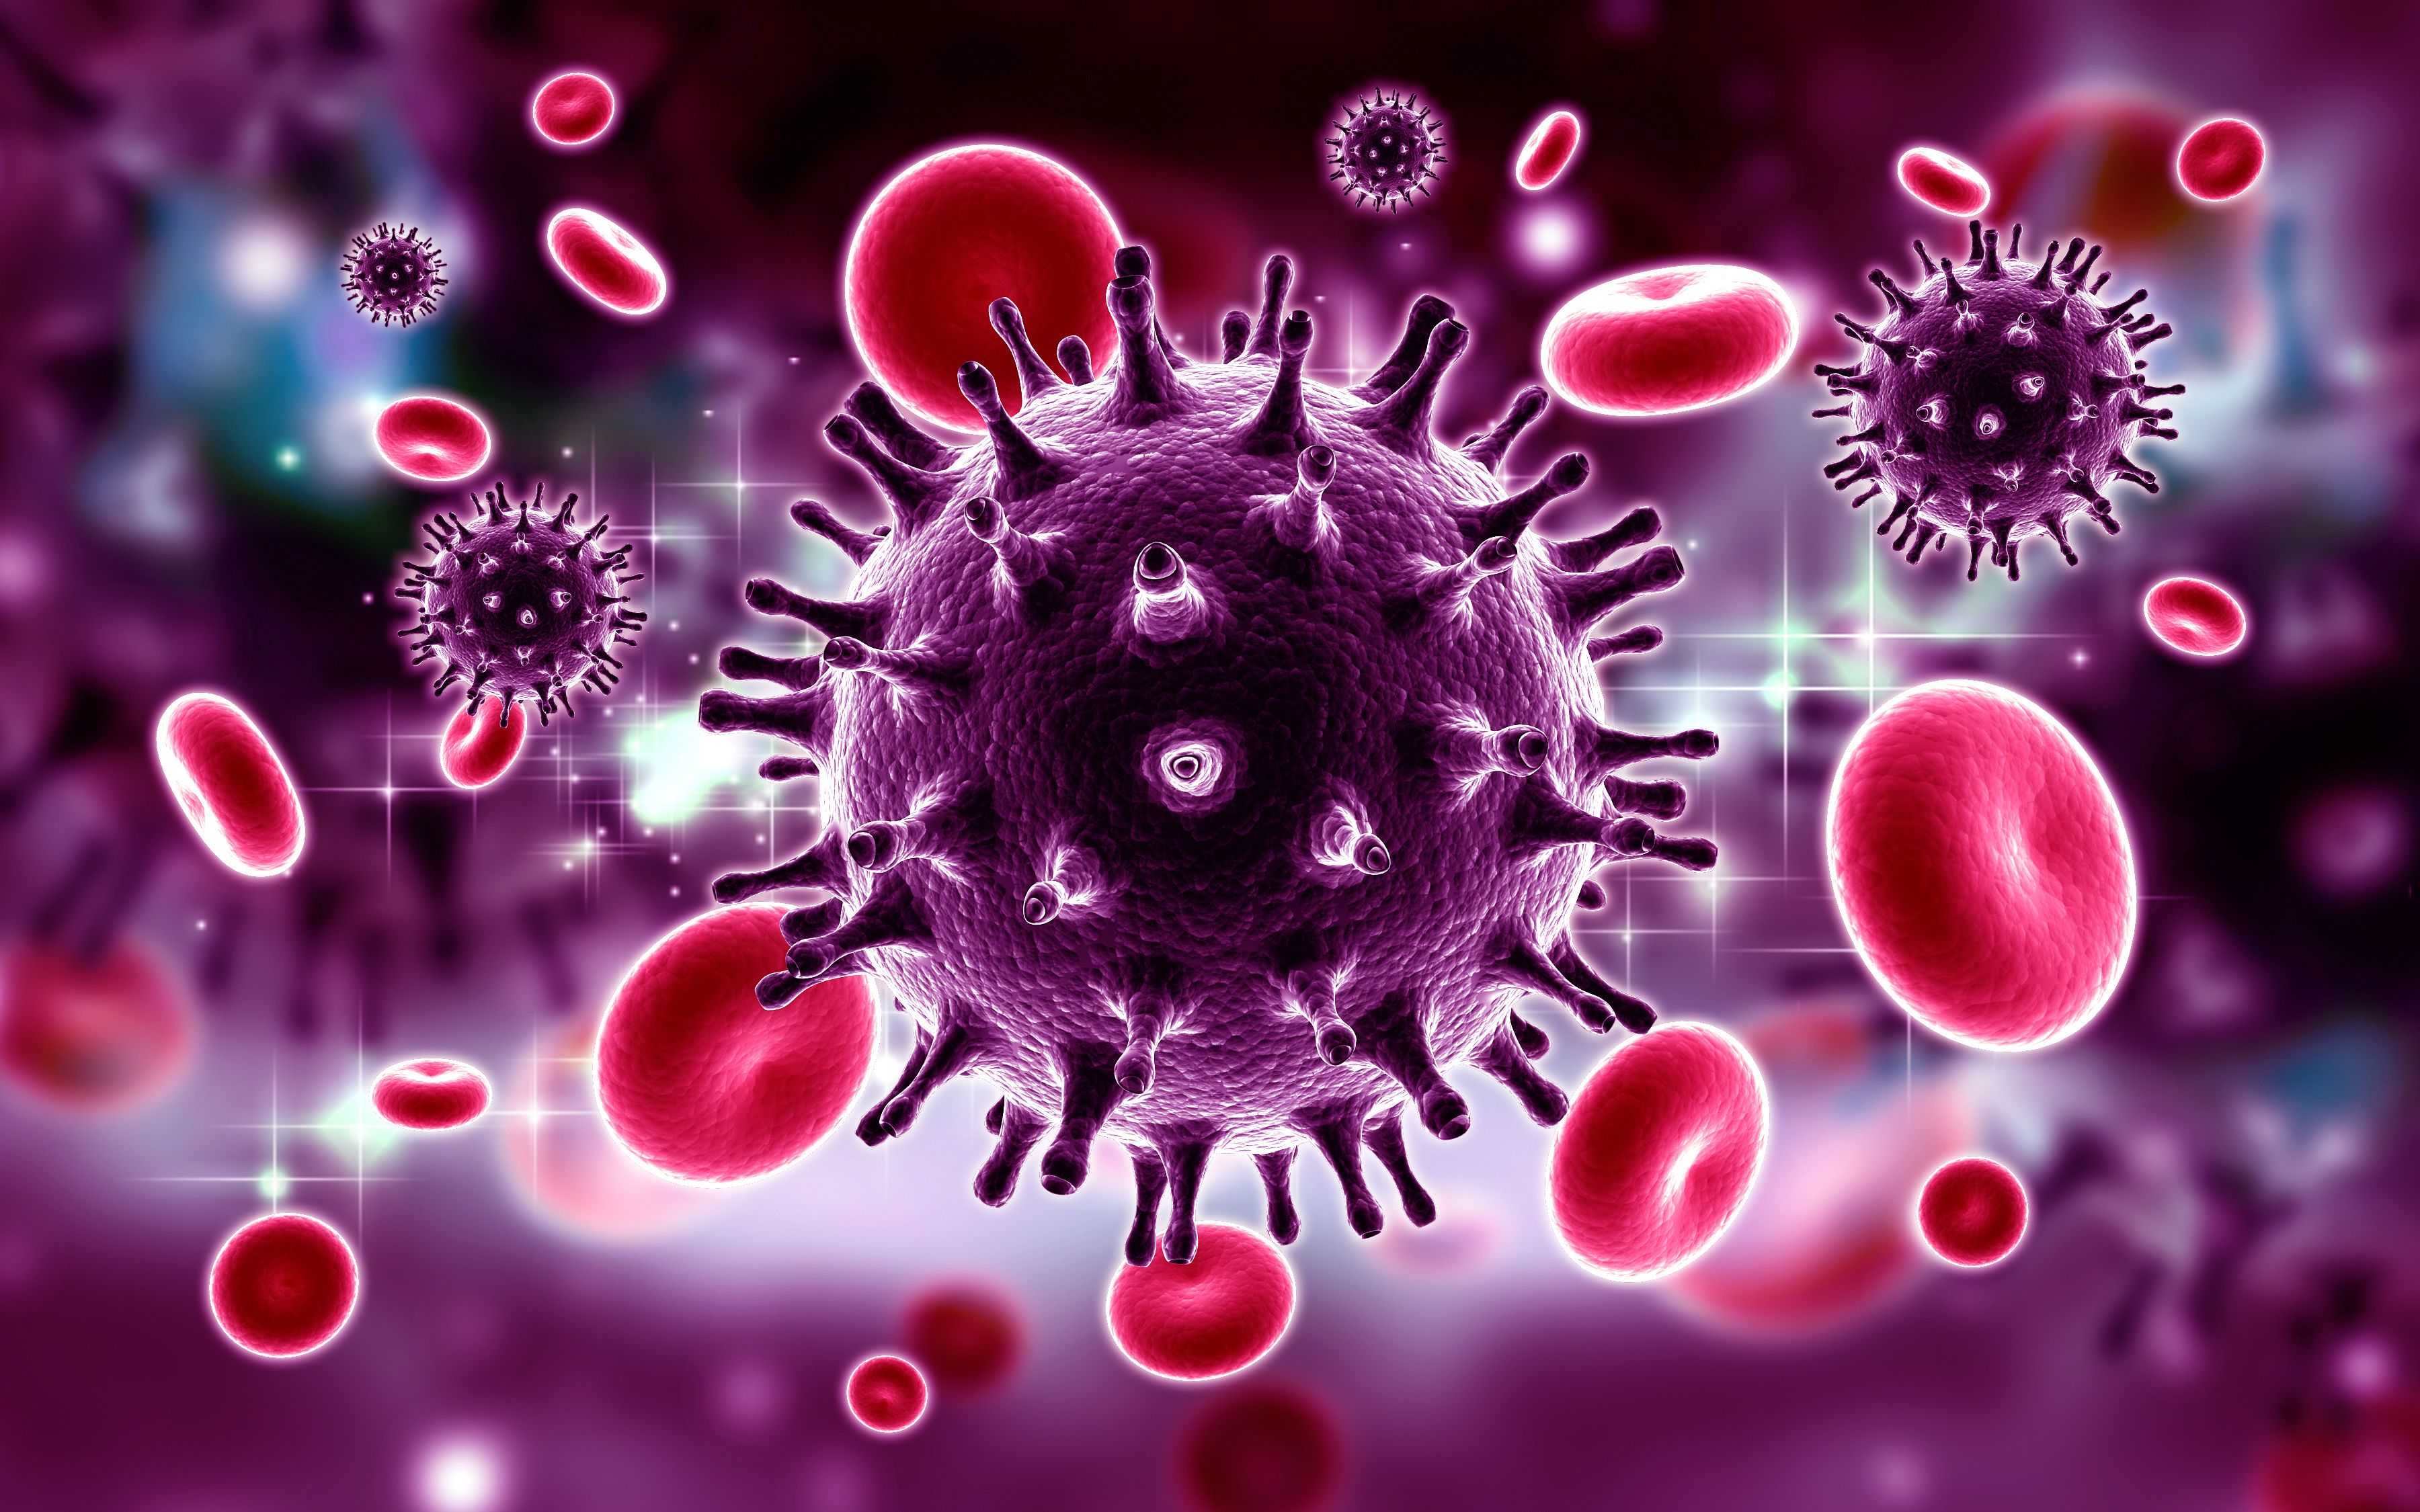 Excision Bio Seeks to Suppress HIV Replication With CRISPR Gene Therapy - AJMC.com Managed Markets Network